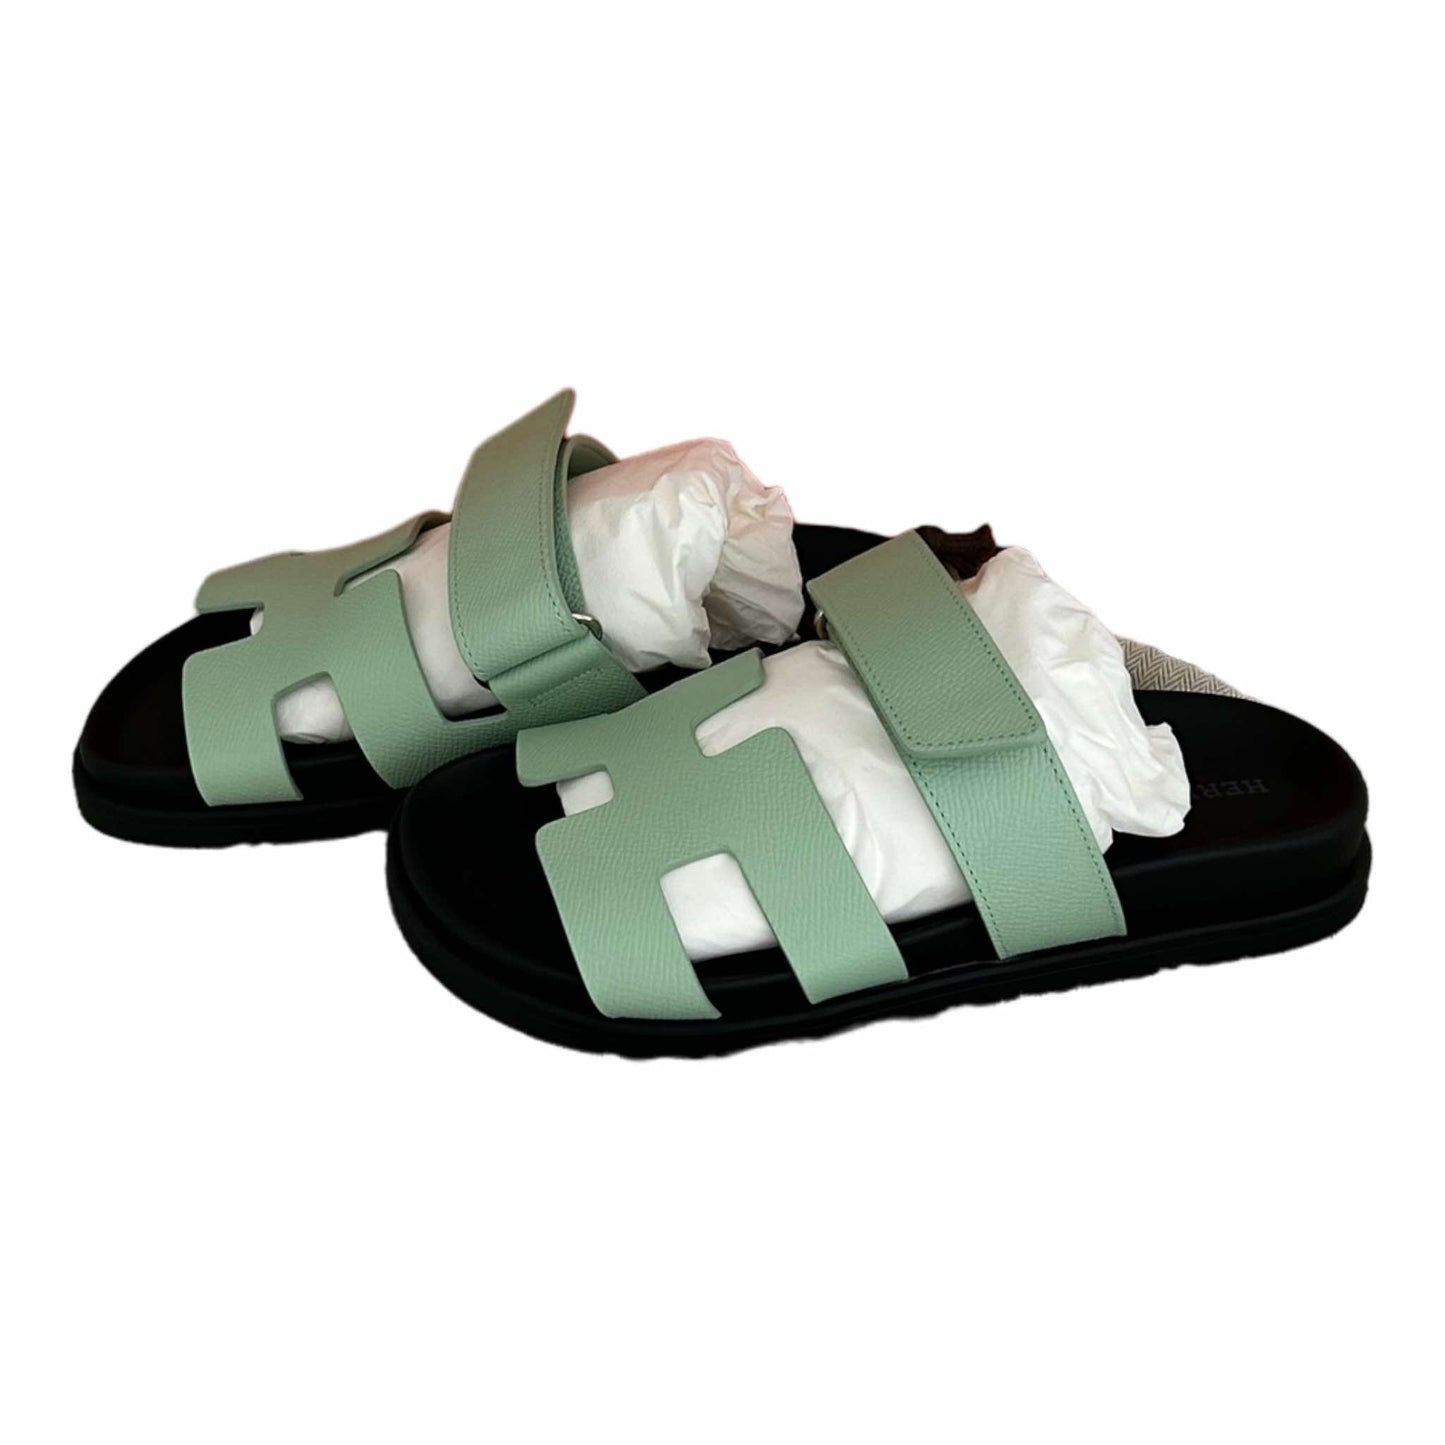 Hermès Chypre Sandals Vert Jade - Size EU 35.5